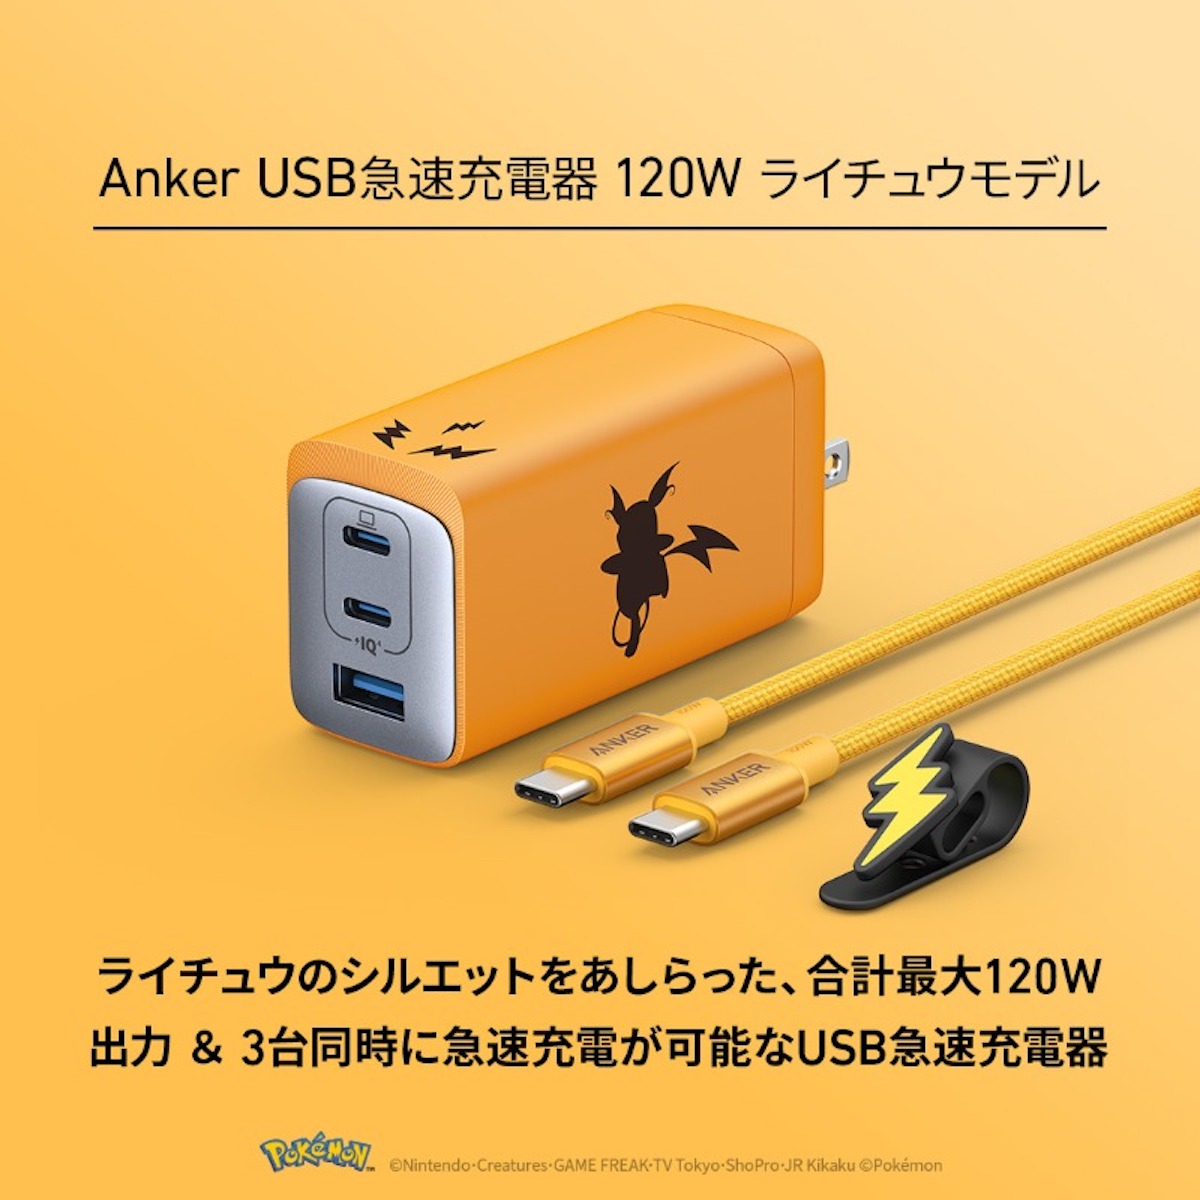 Anker USB急速充電器 120W ライチュウモデルが販売開始 - iPhone Mania